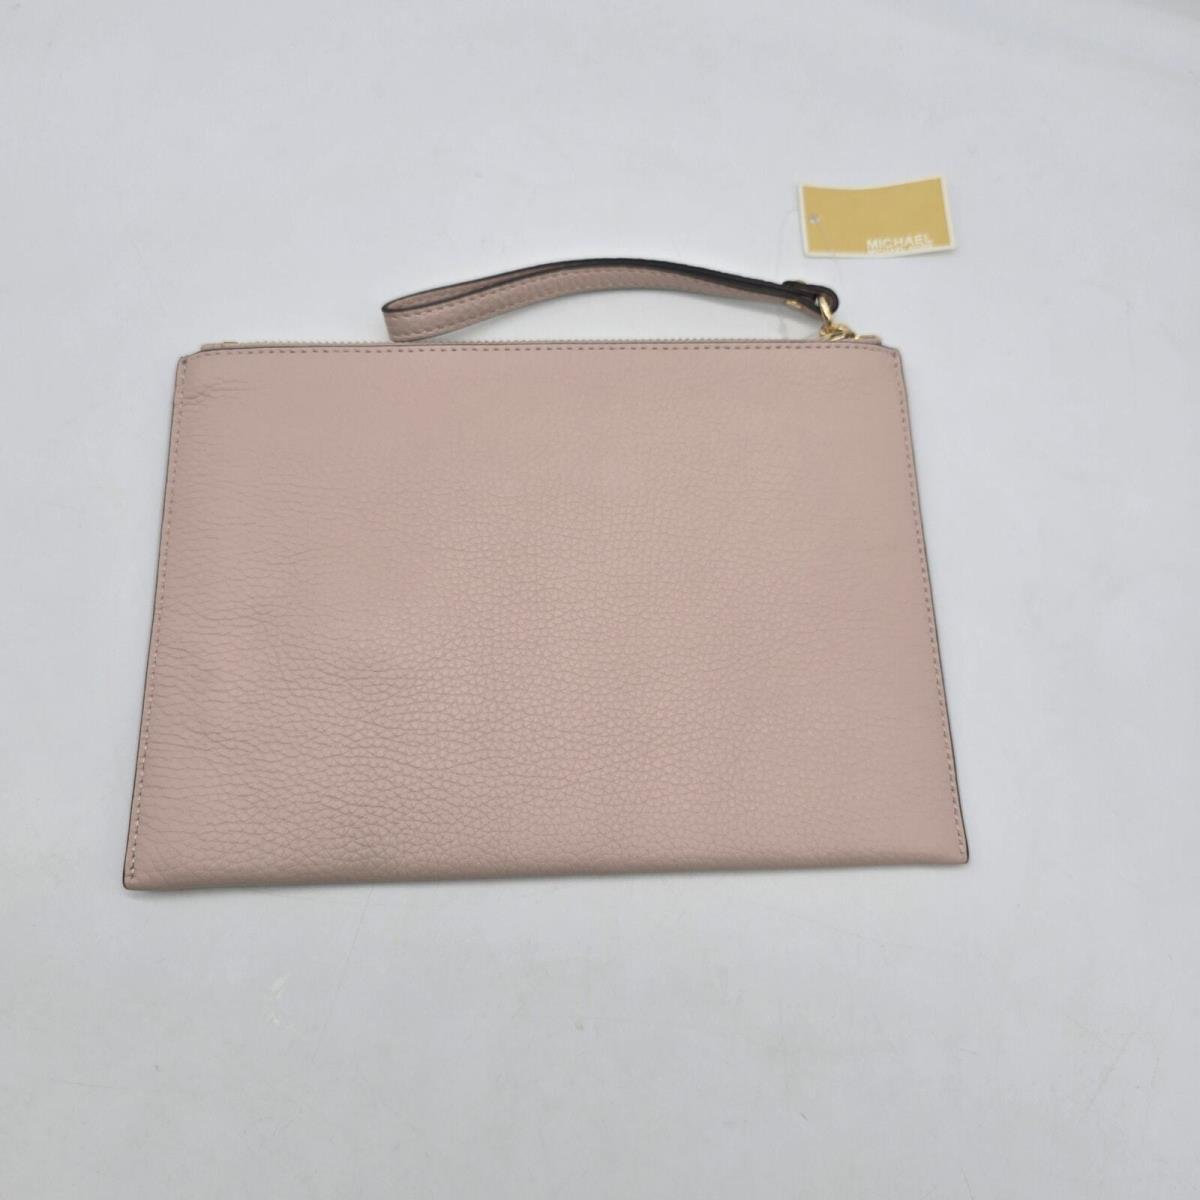 Michael Kors Jet Set Charm Leather Zip Clutch Wristlet Bag Going Out Soft Pink